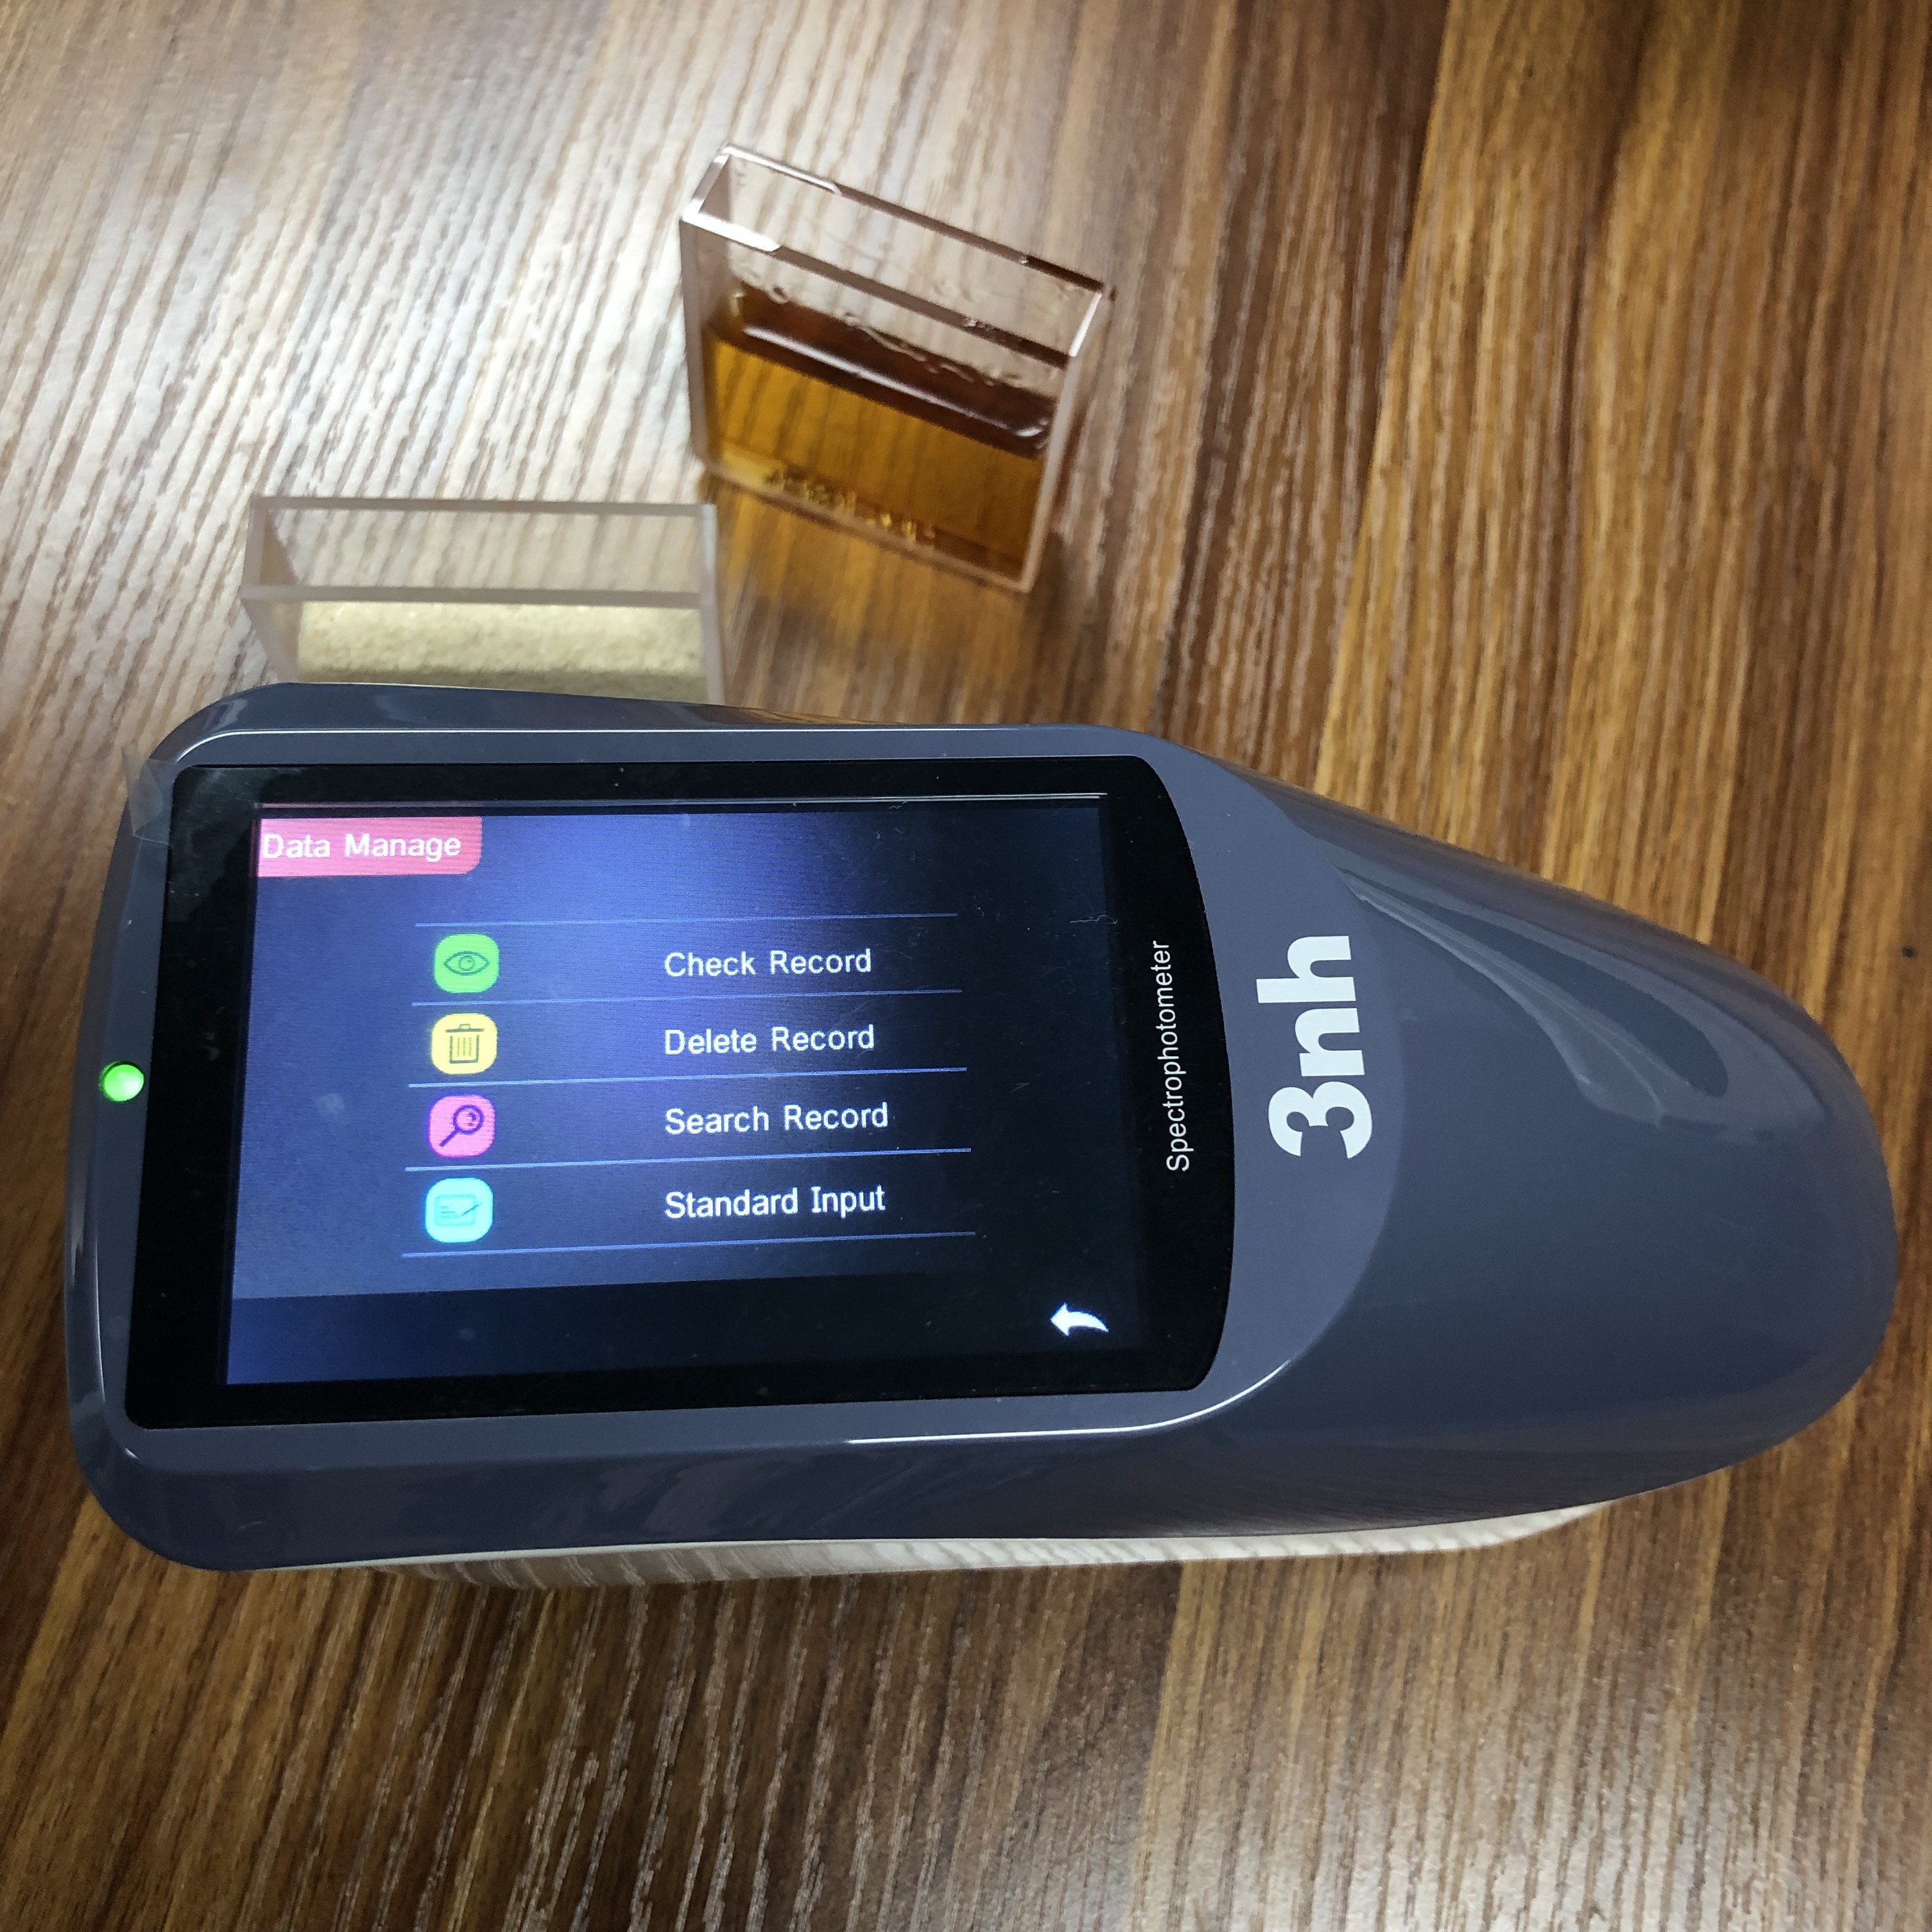 Quality 3NH UV Light Car Paint Spectrophotometer Bluetooth / USB Interface wholesale